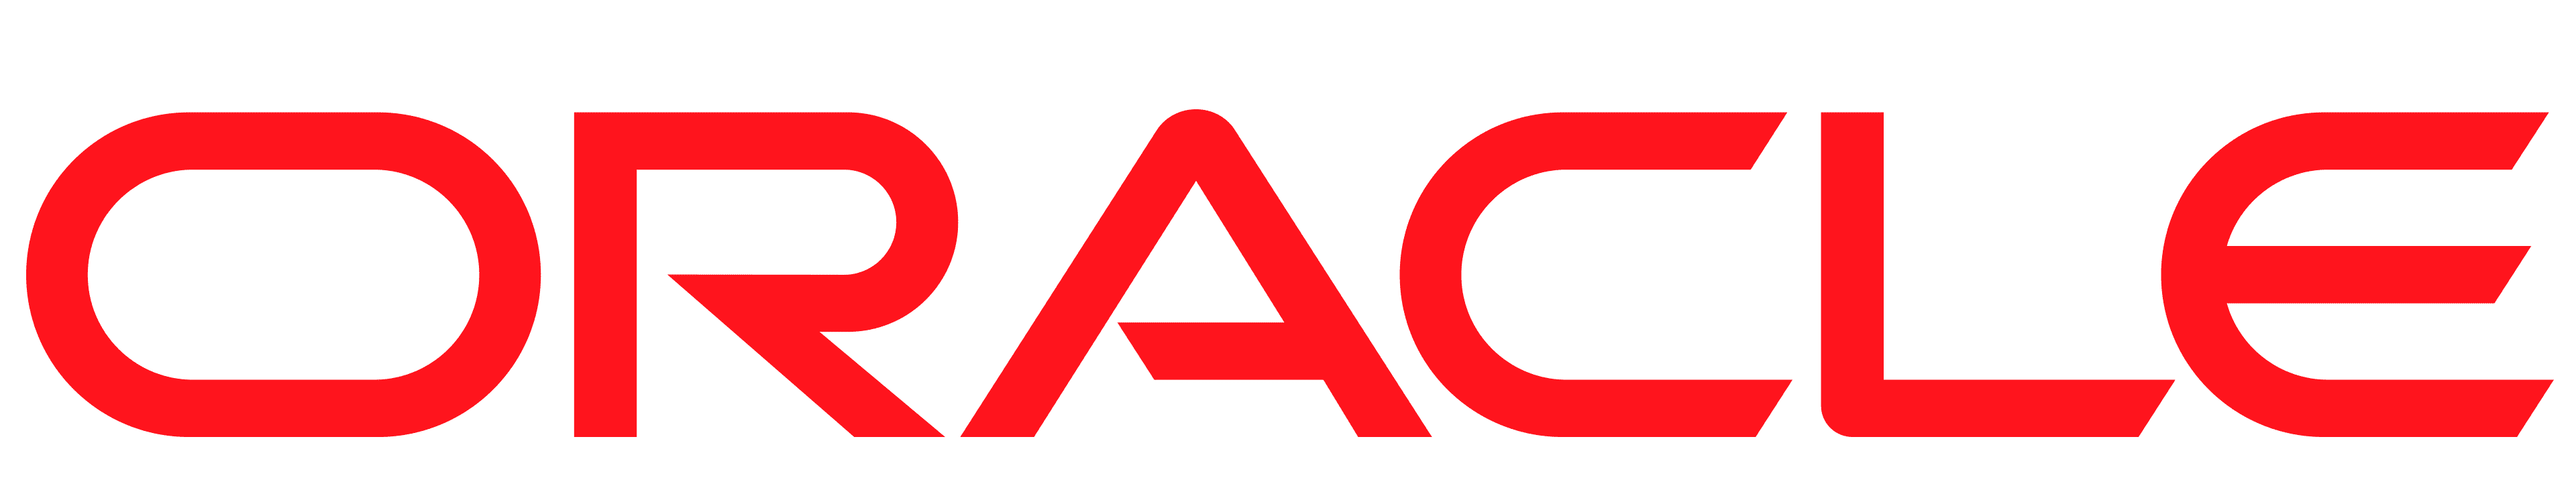 cropped Oracle Logo 1